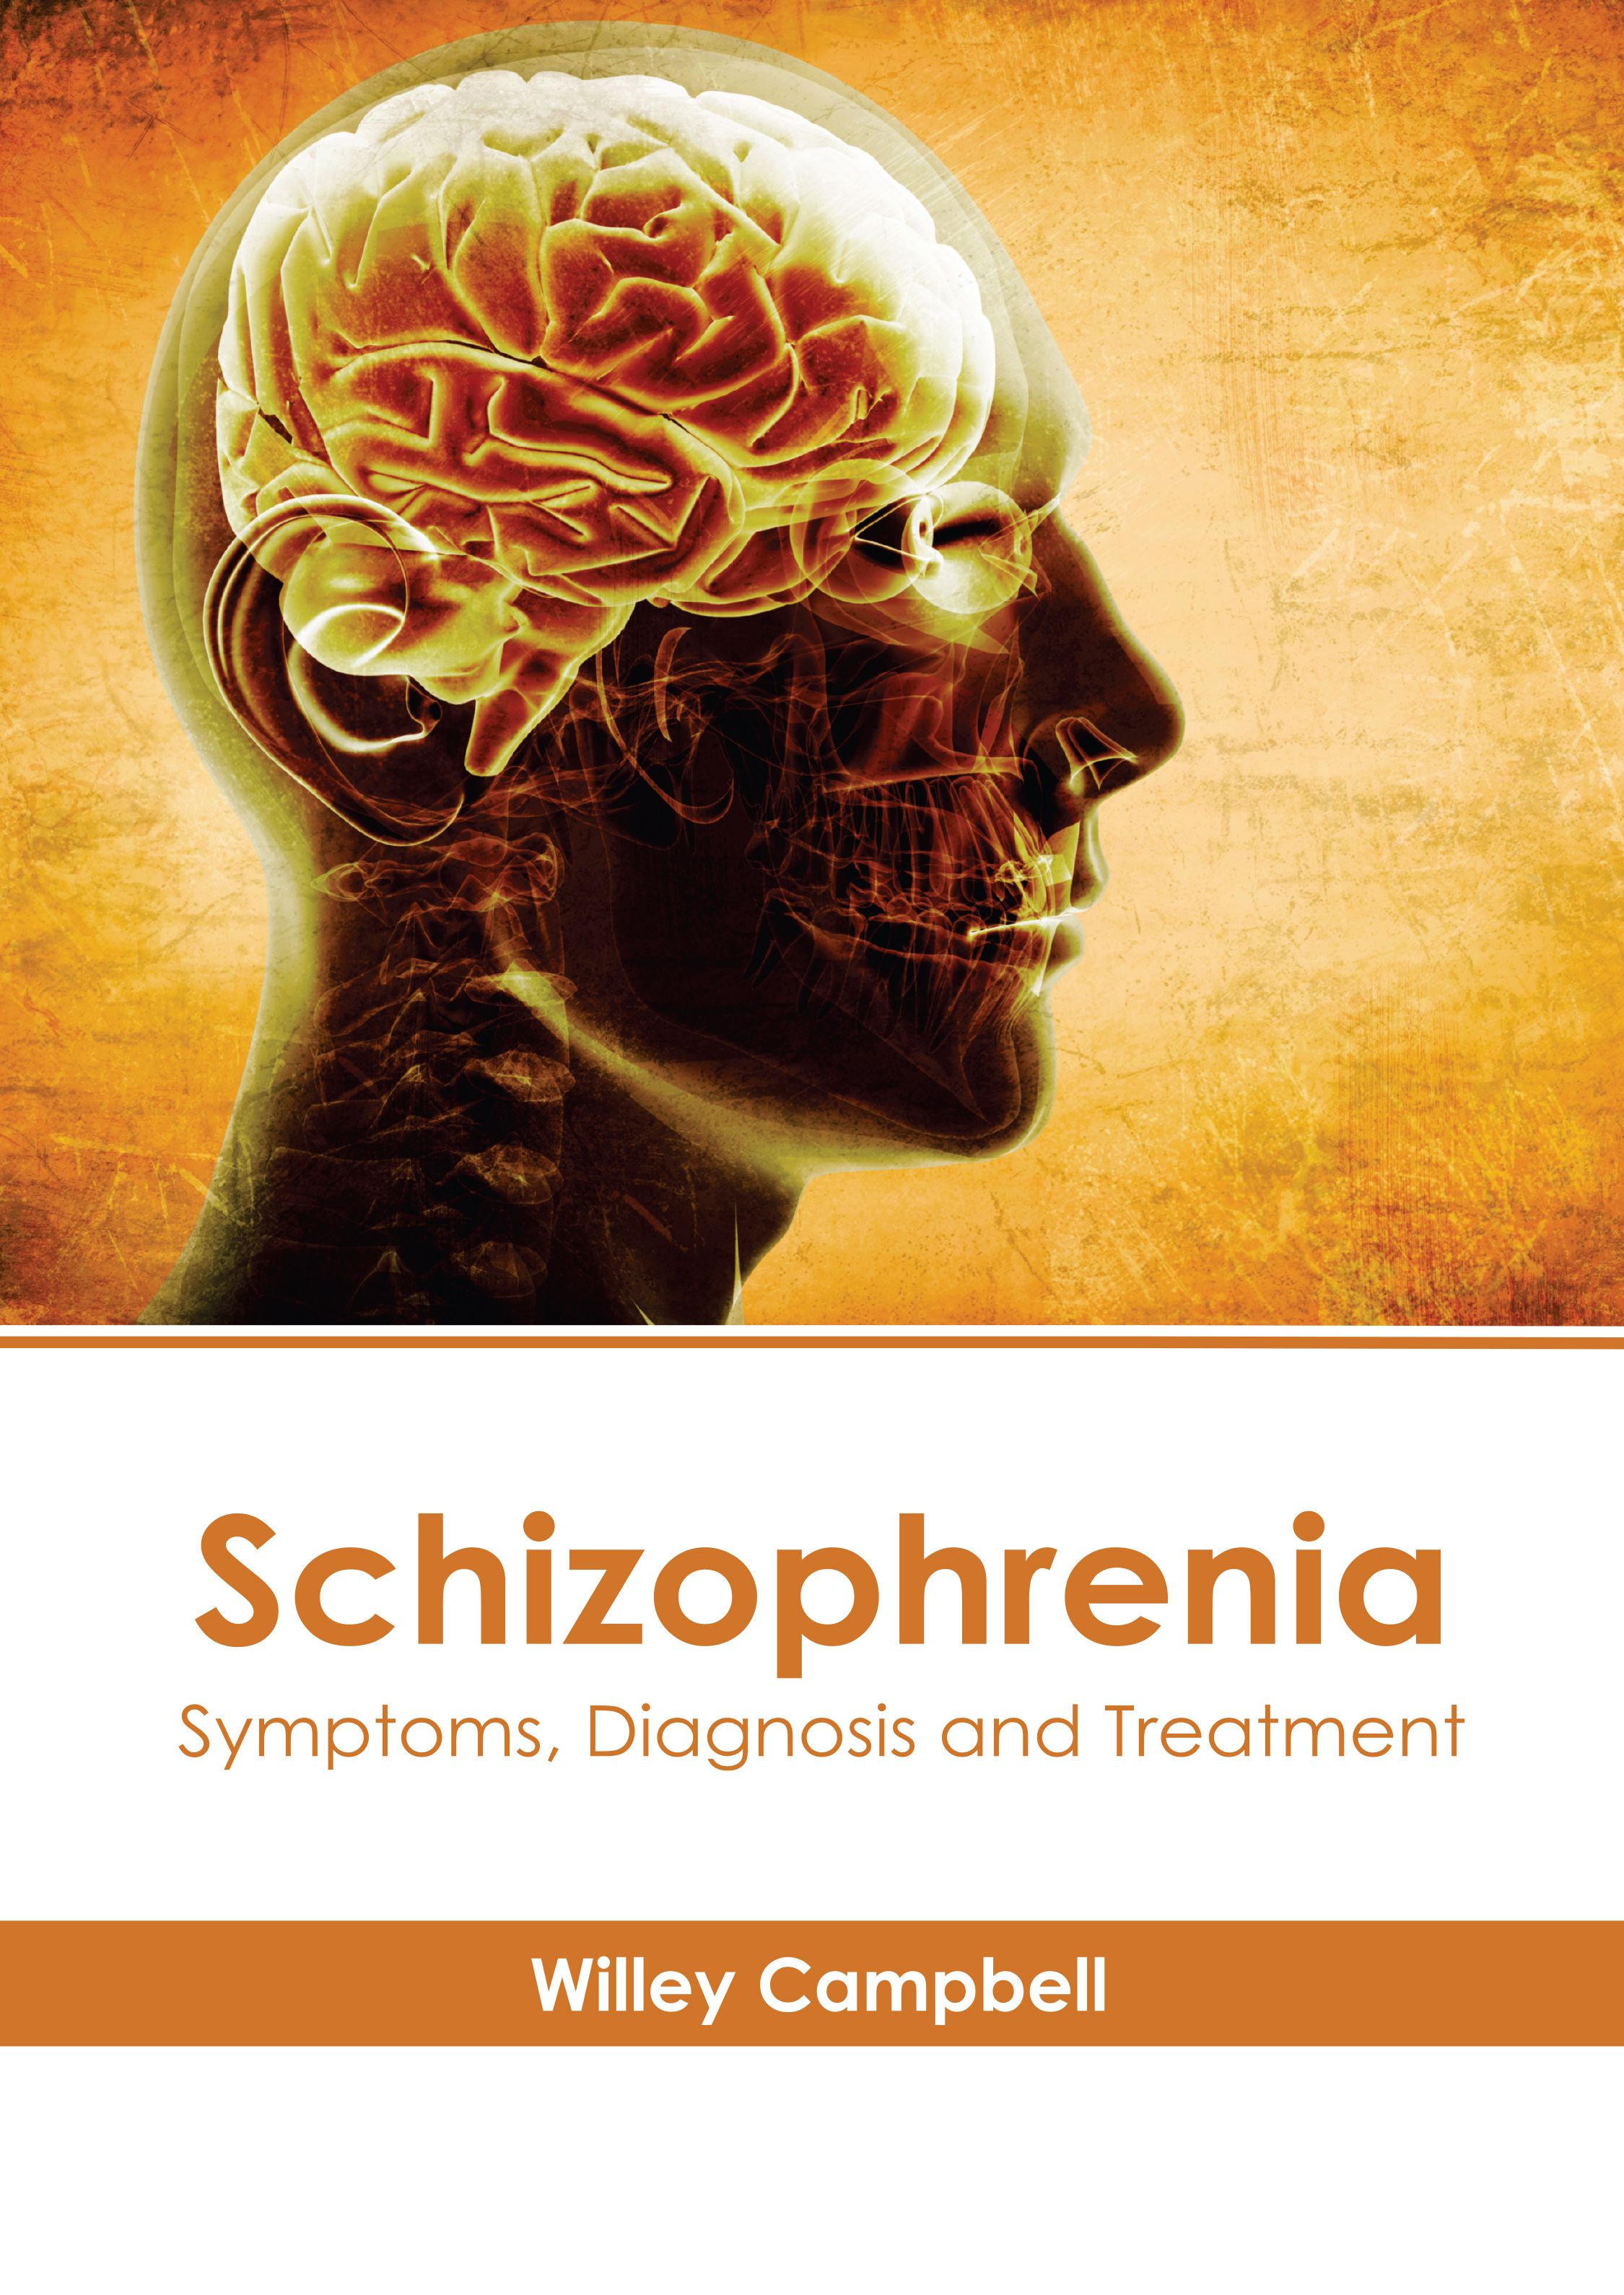 SCHIZOPHRENIA: SYMPTOMS, DIAGNOSIS AND TREATMENT